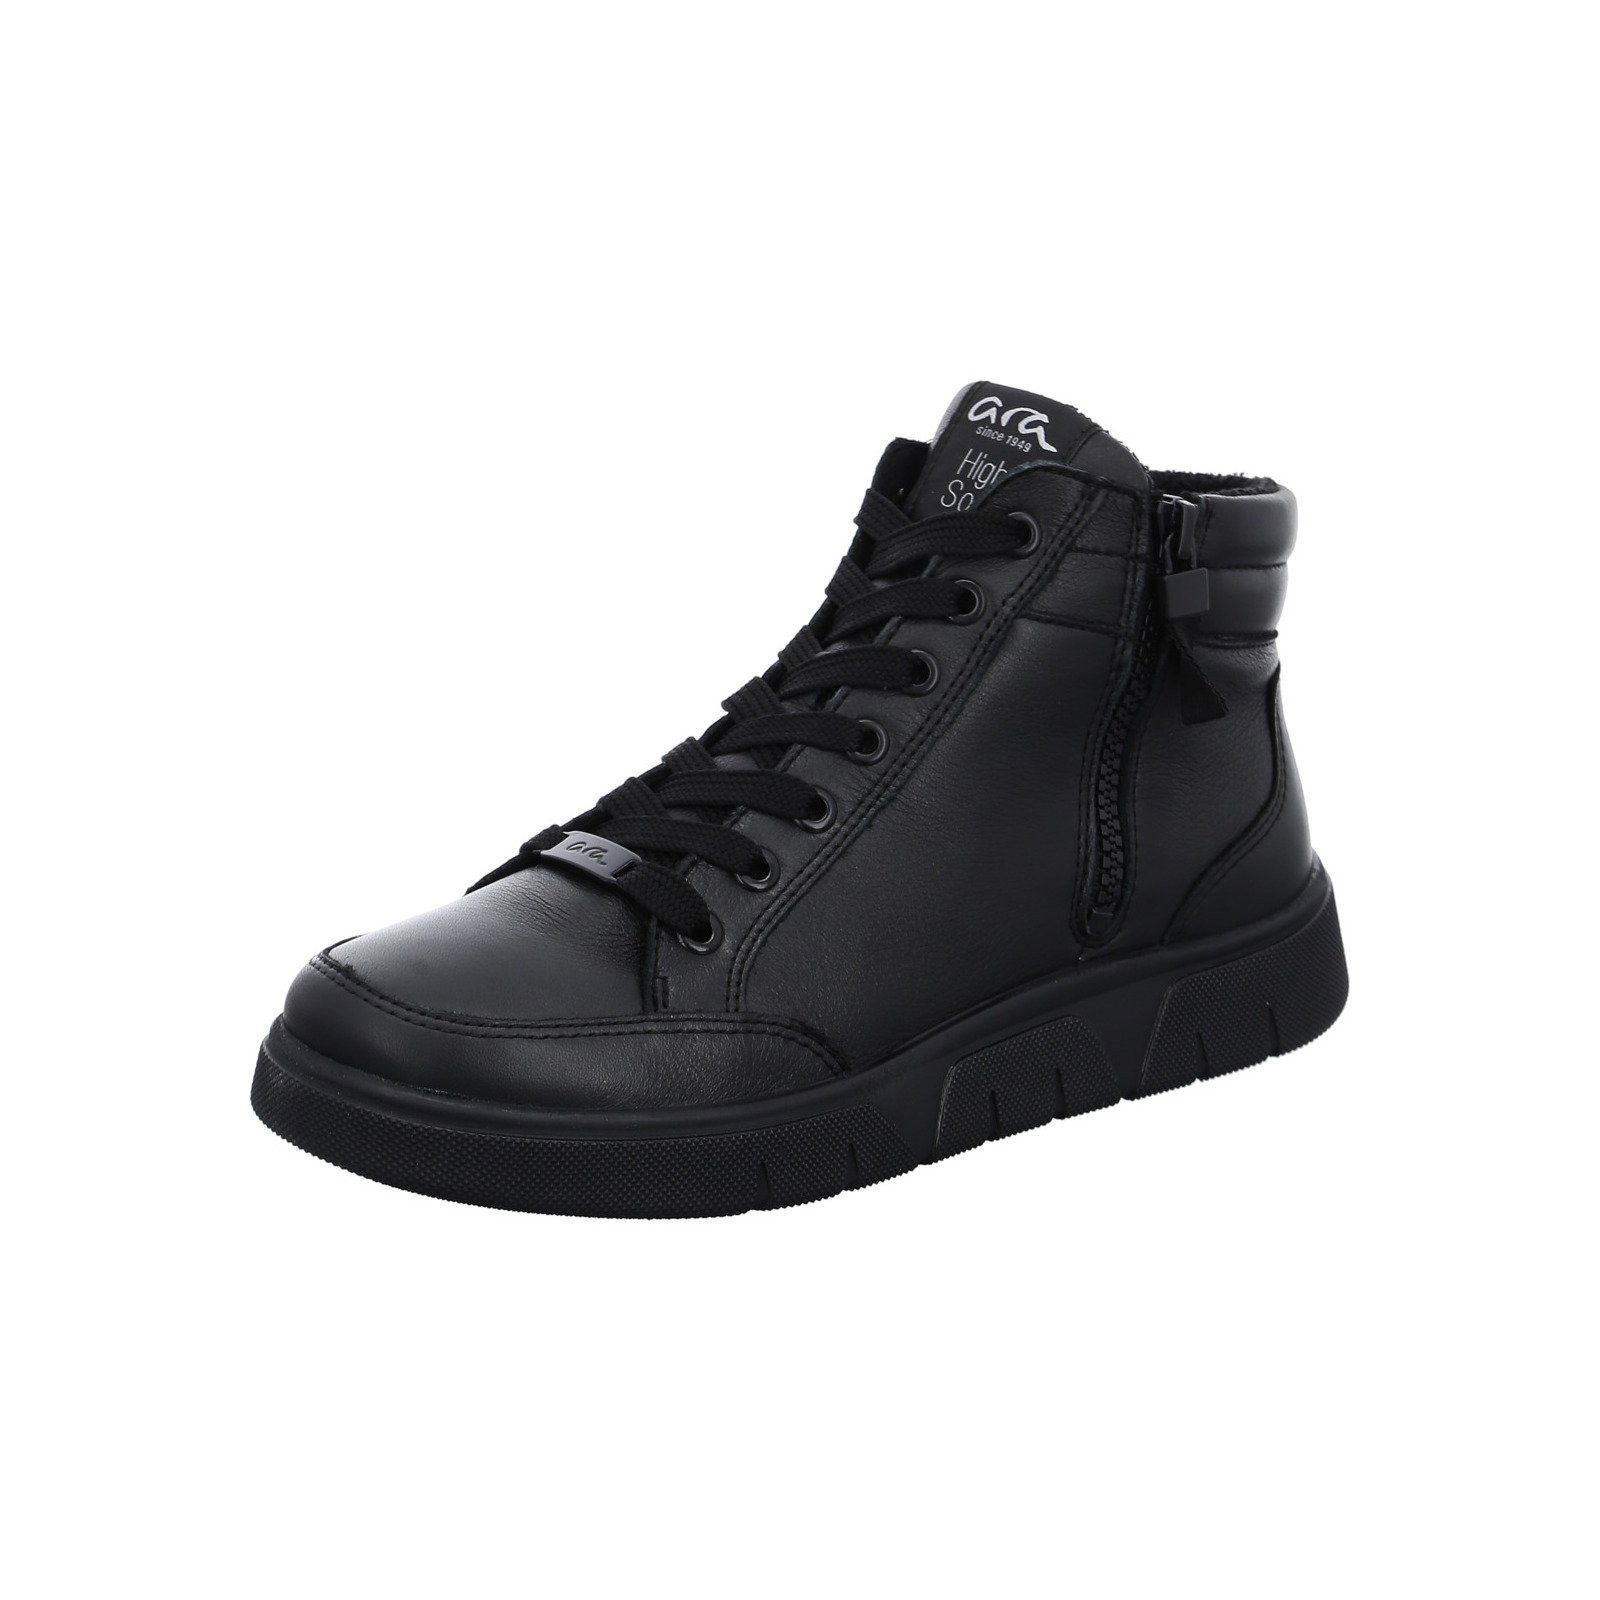 Ara Rom-Sport - Damen Schuhe Sneaker Stiefeletten Glattleder schwarz